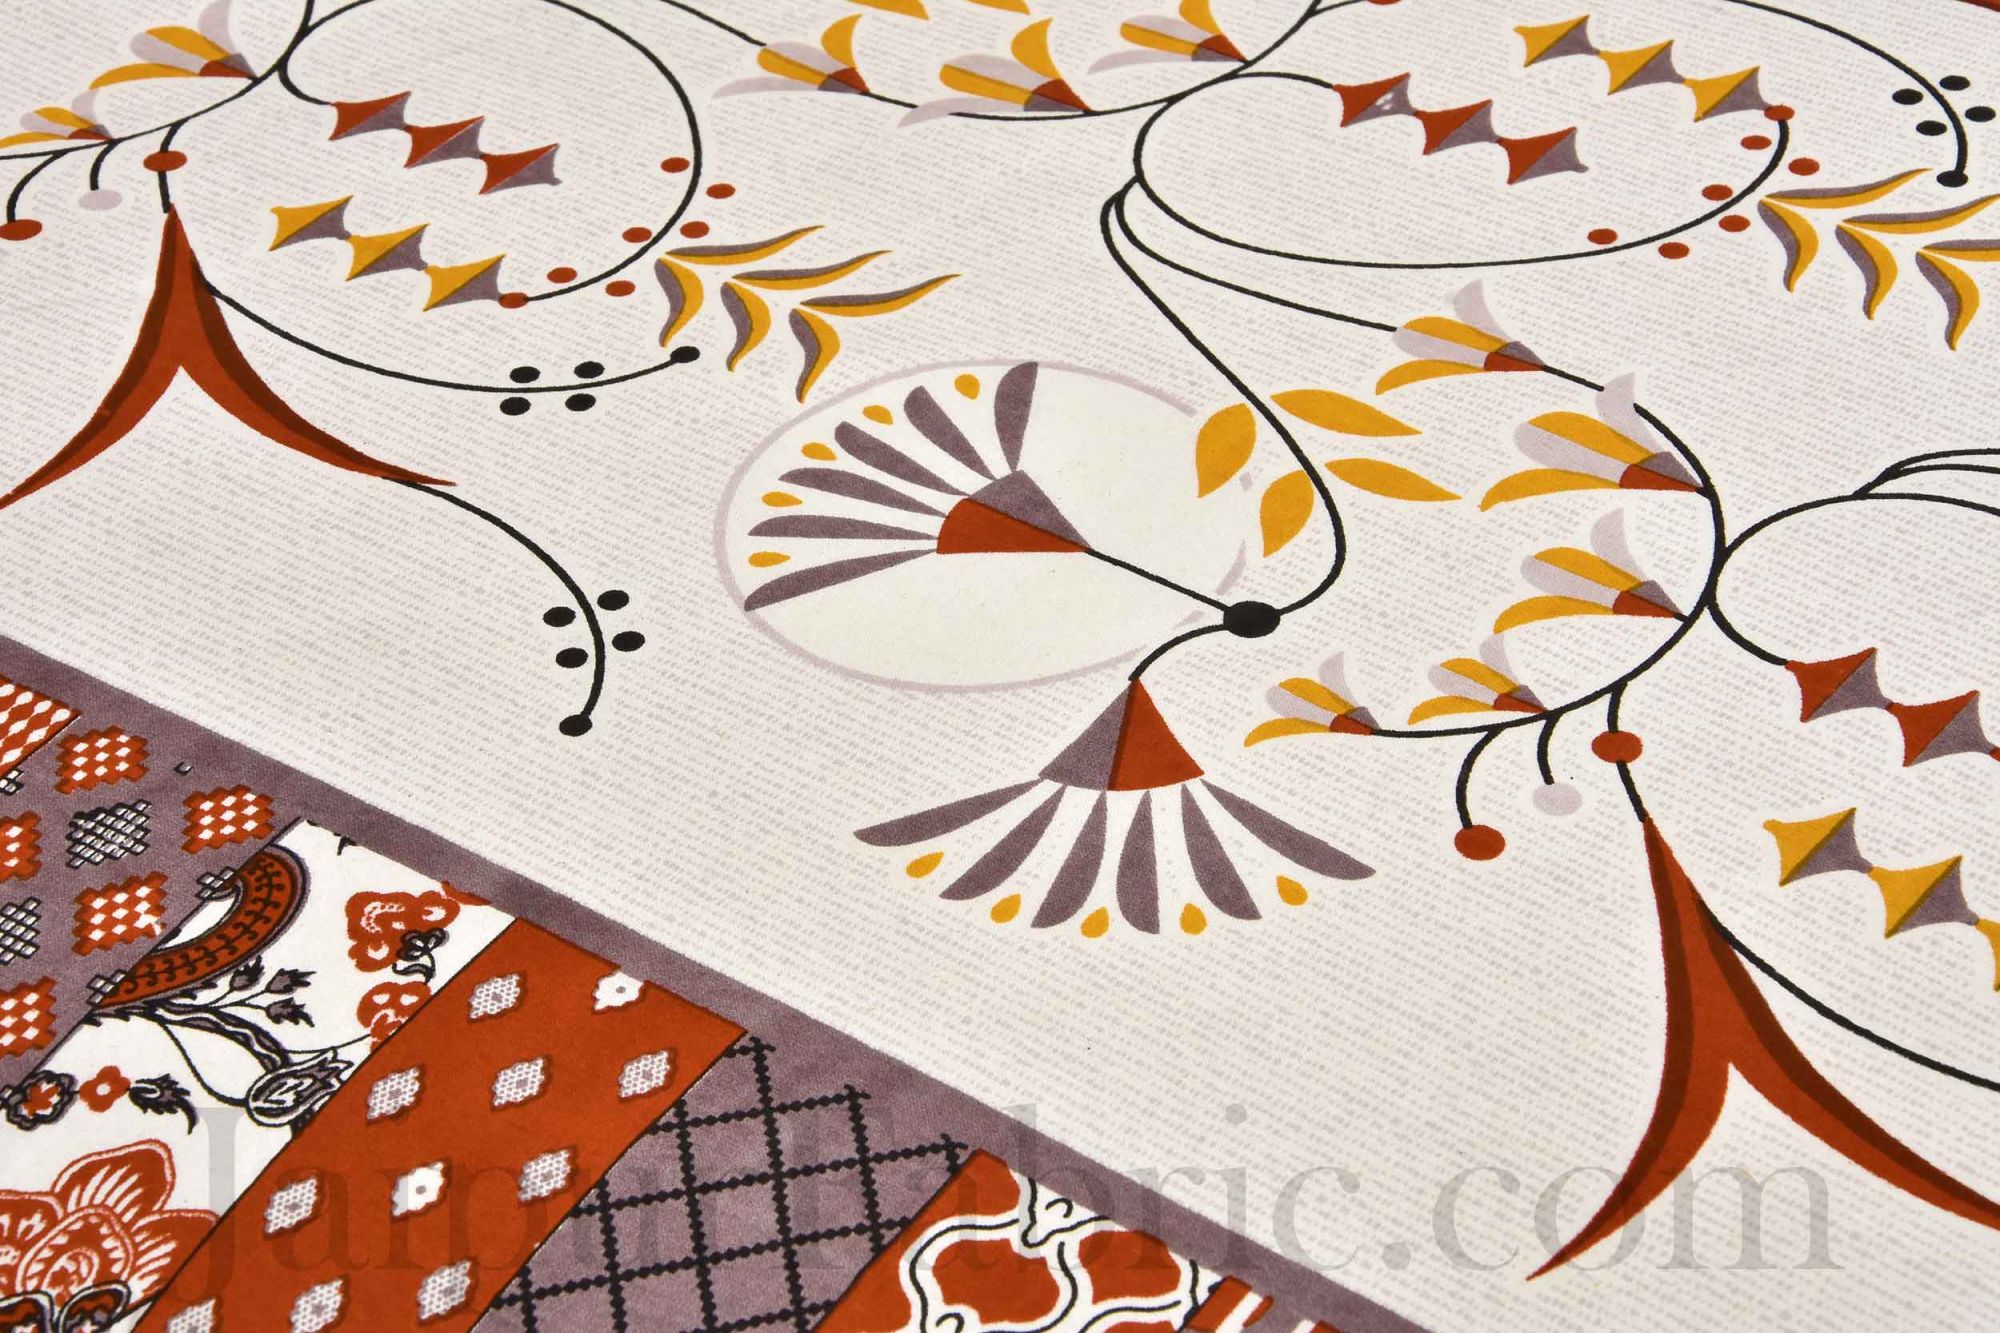 Maroon Floral Ethnic Cotton Jaipur Double Bedsheet